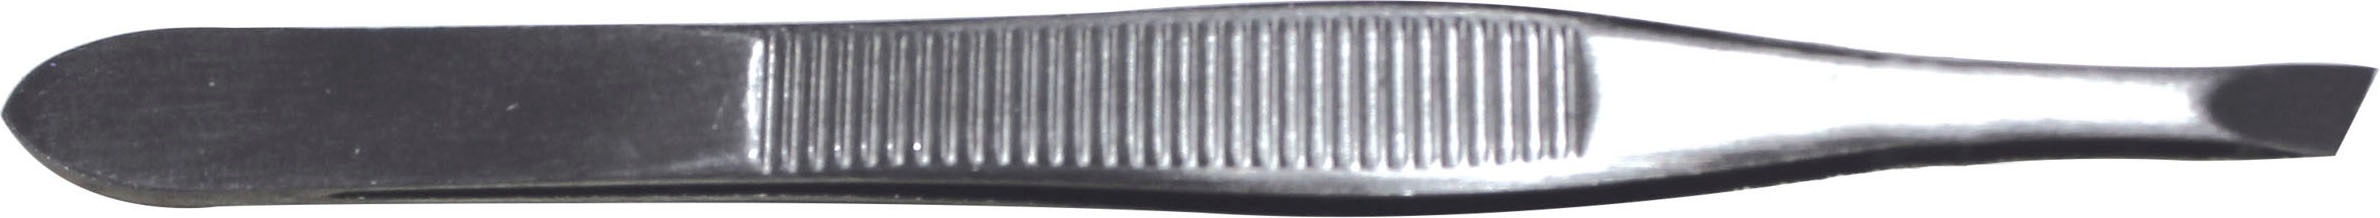 Remington Beauty-Trimmer »NE3455«, 2 Aufsätze, antimikrobielles Nano-Silber Gehäuse